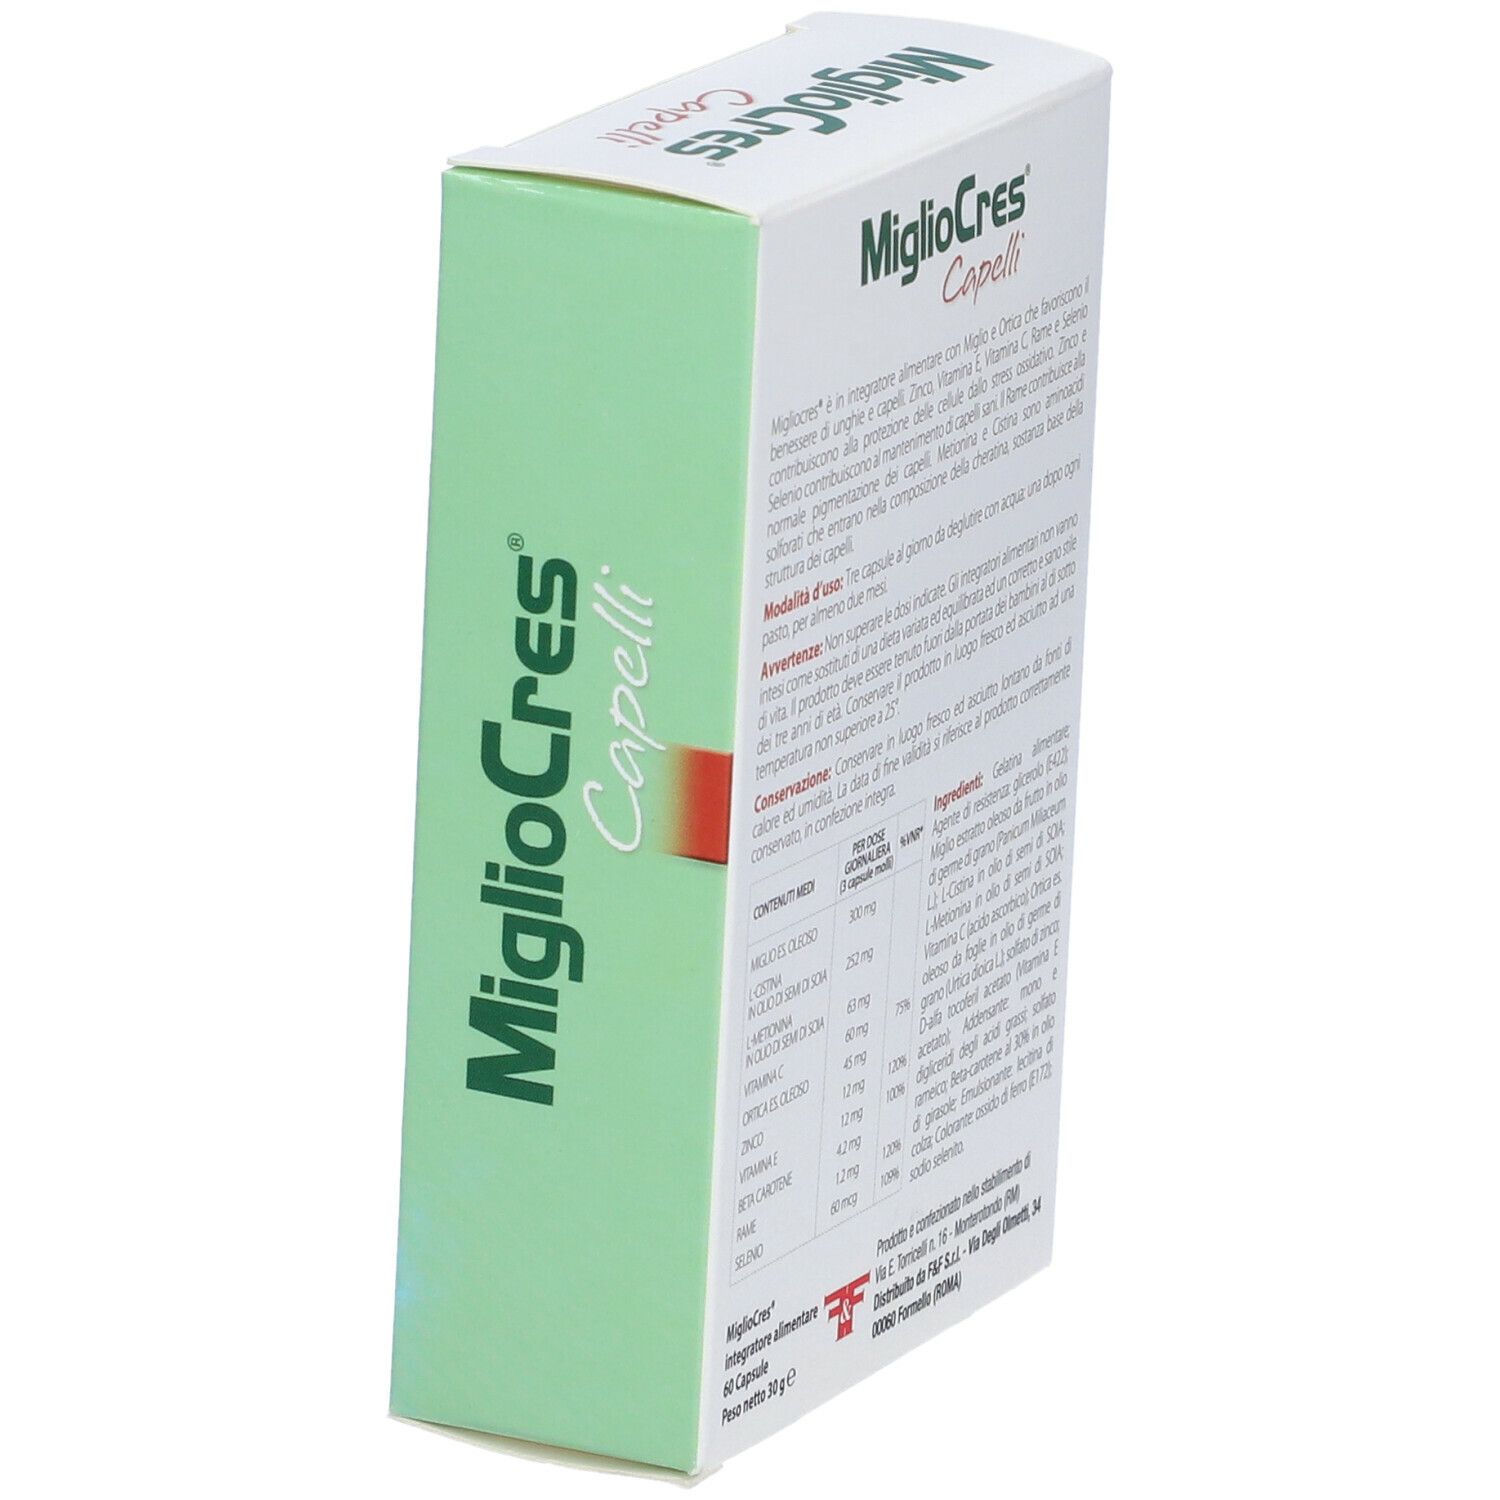 Migliocres 60Cps